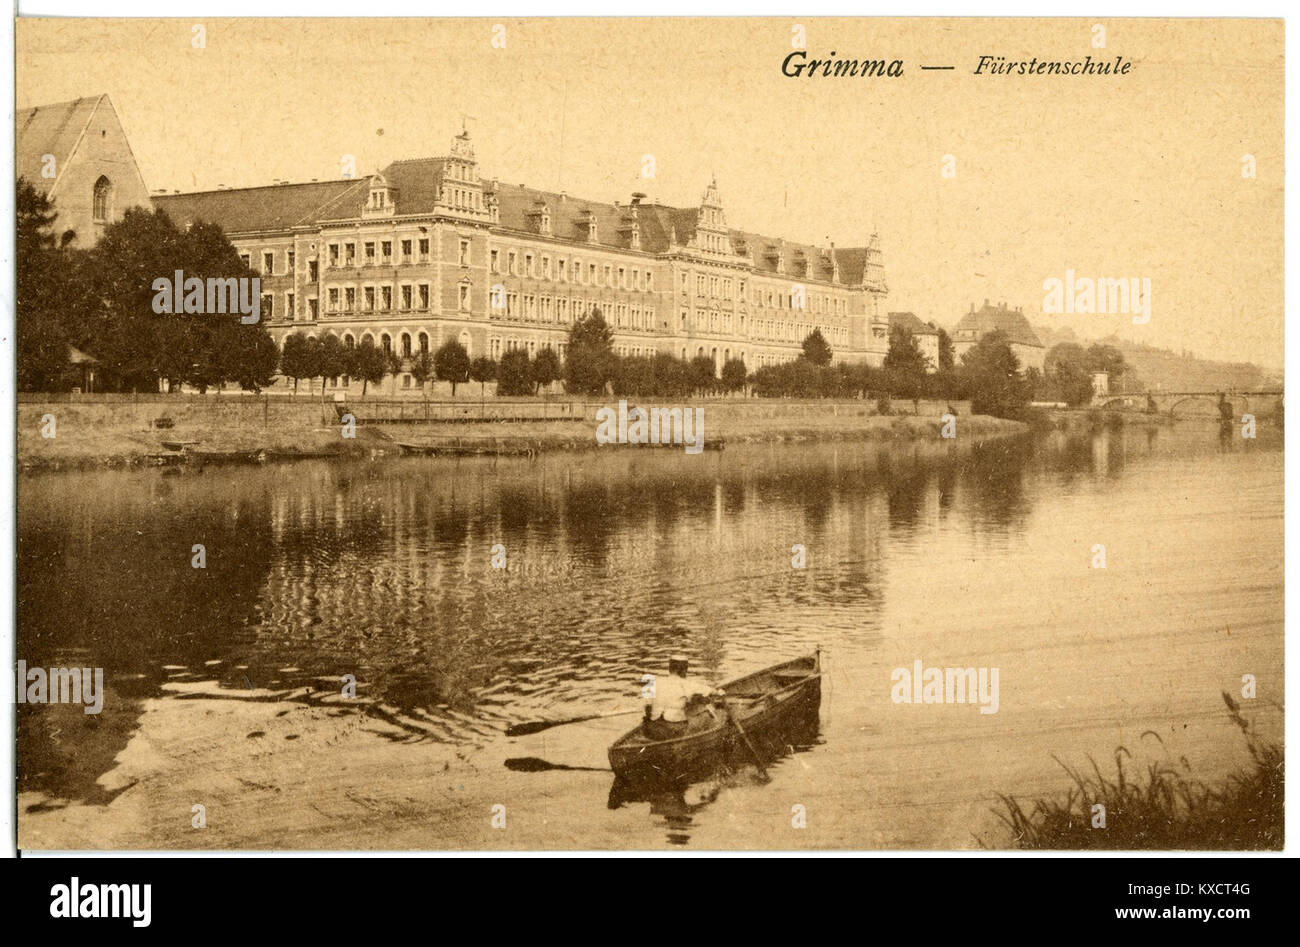 21380-Grimma-1919-Fürstenschule-Brück & Sohn Kunstverlag Stock Photo